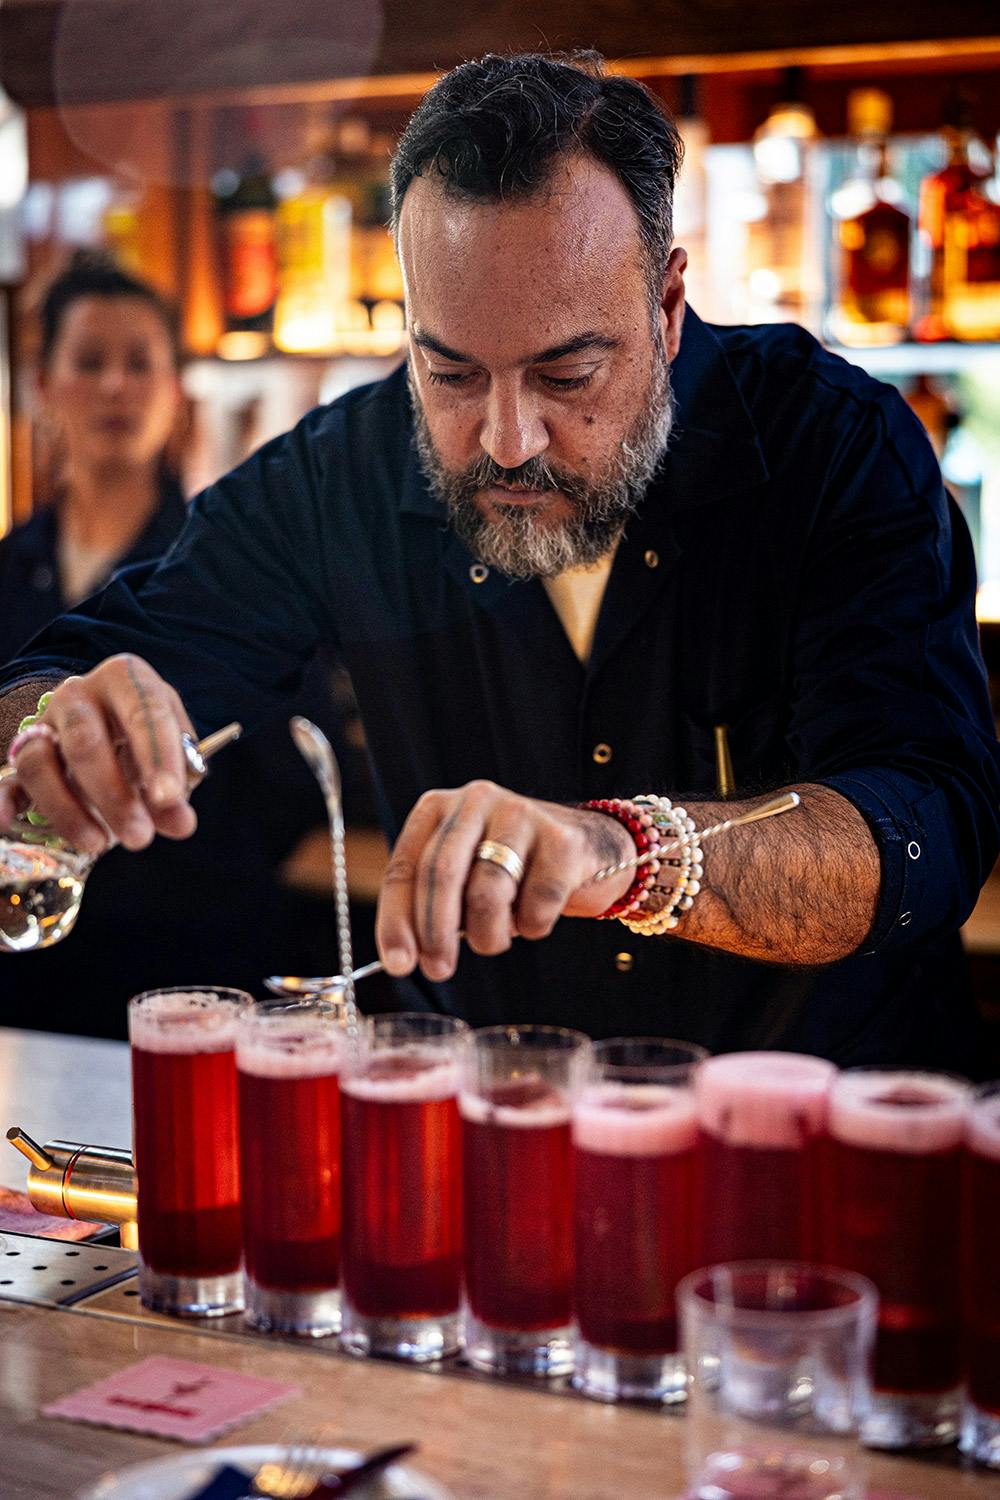 An expert bartender serves a row of red cocktails